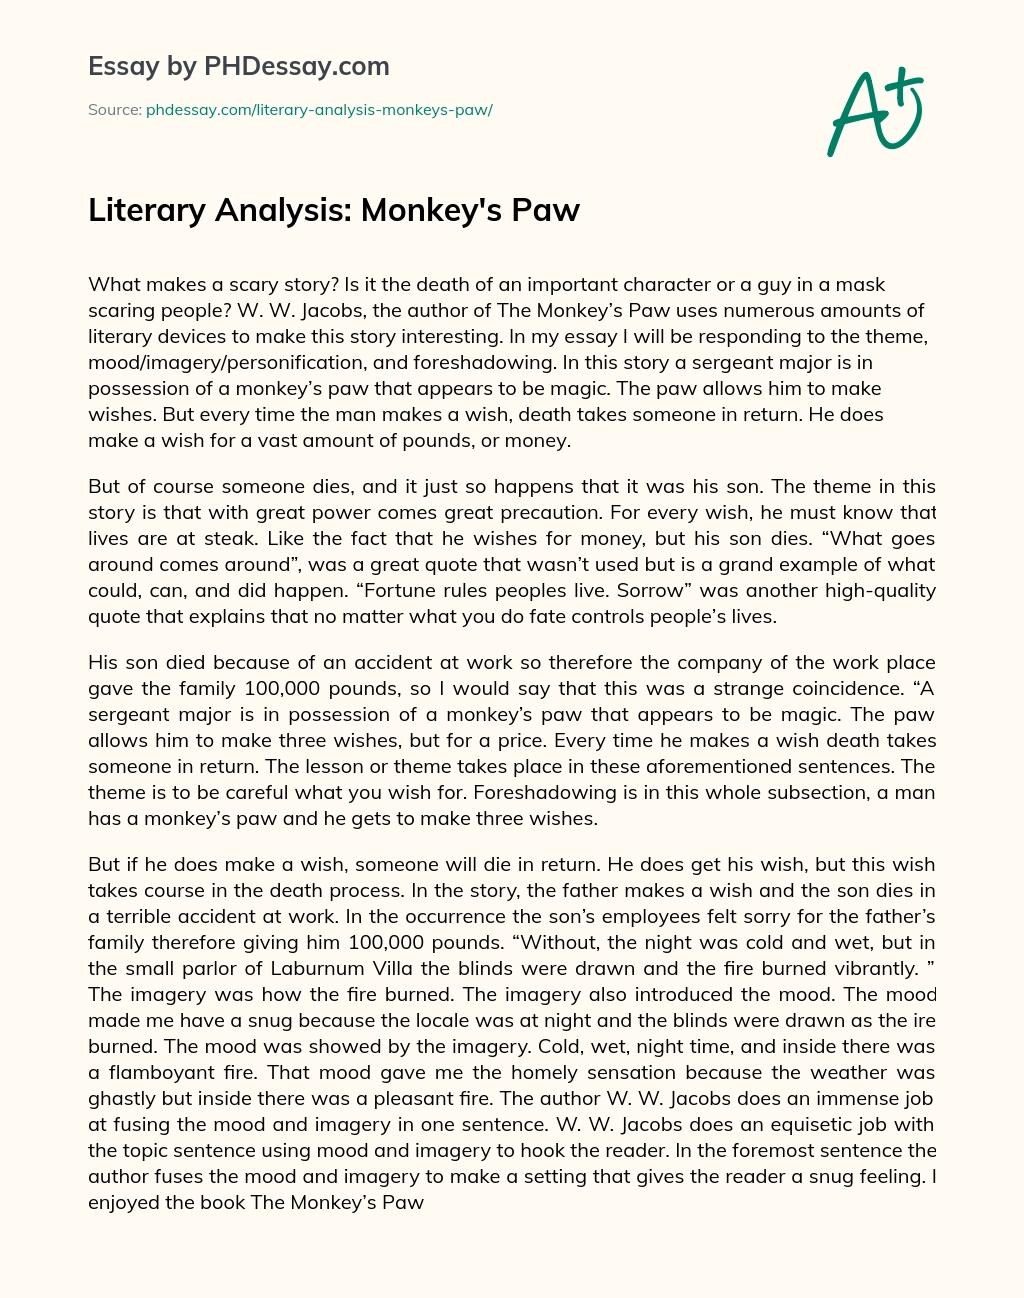 Literary Analysis: Monkey’s Paw essay